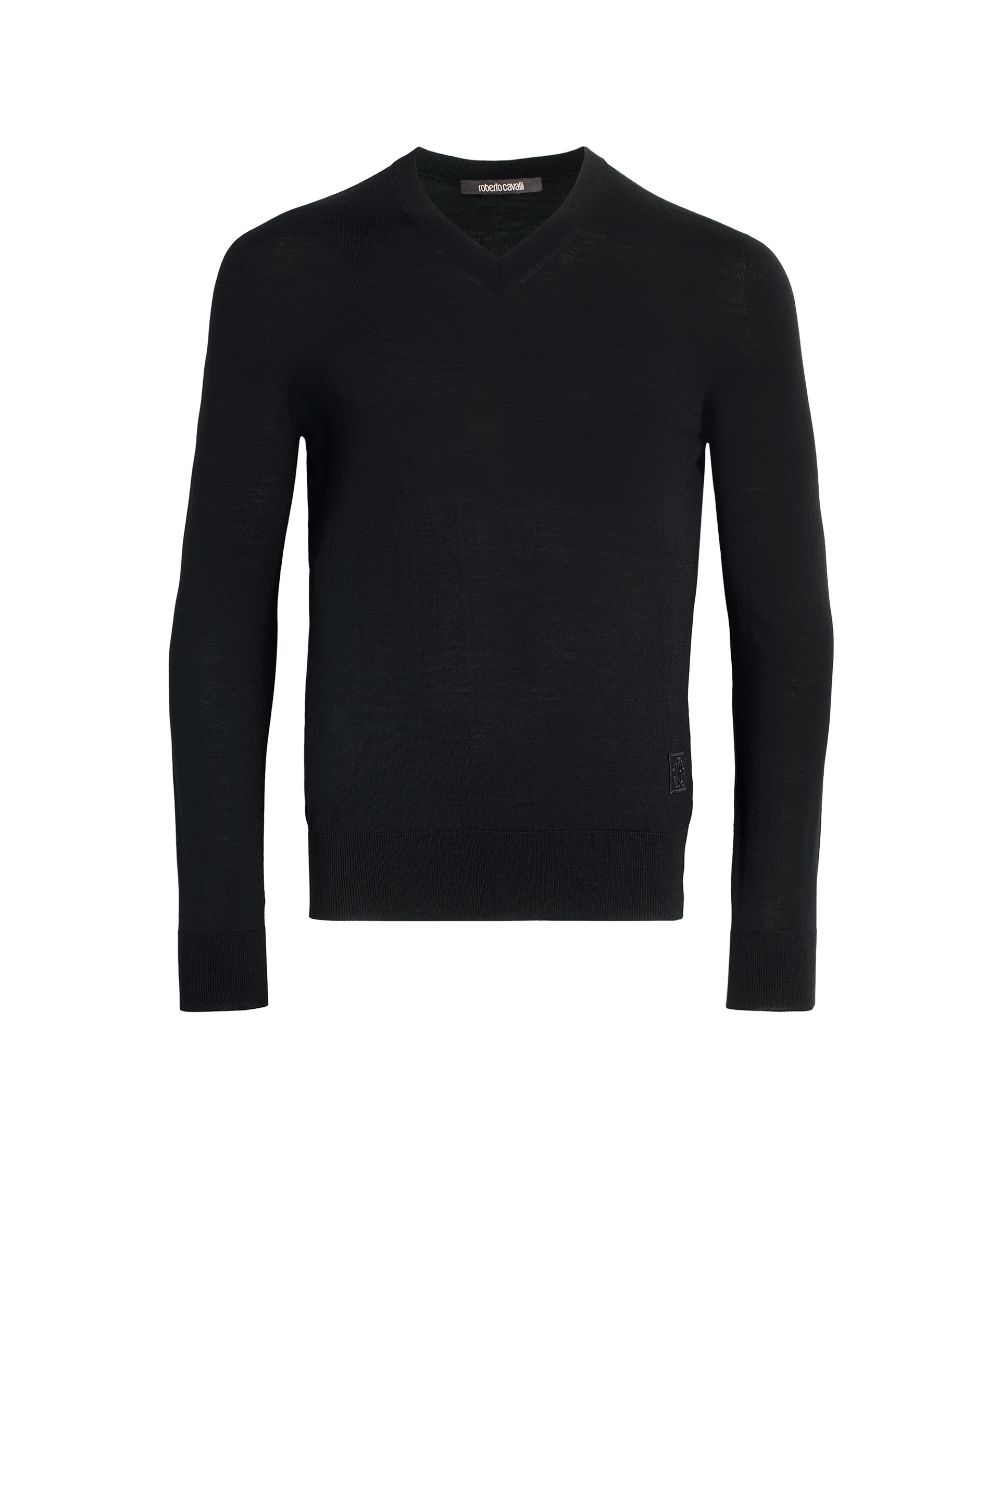 Roberto Cavalli Black V Neck Wool Sweater | ModeSens